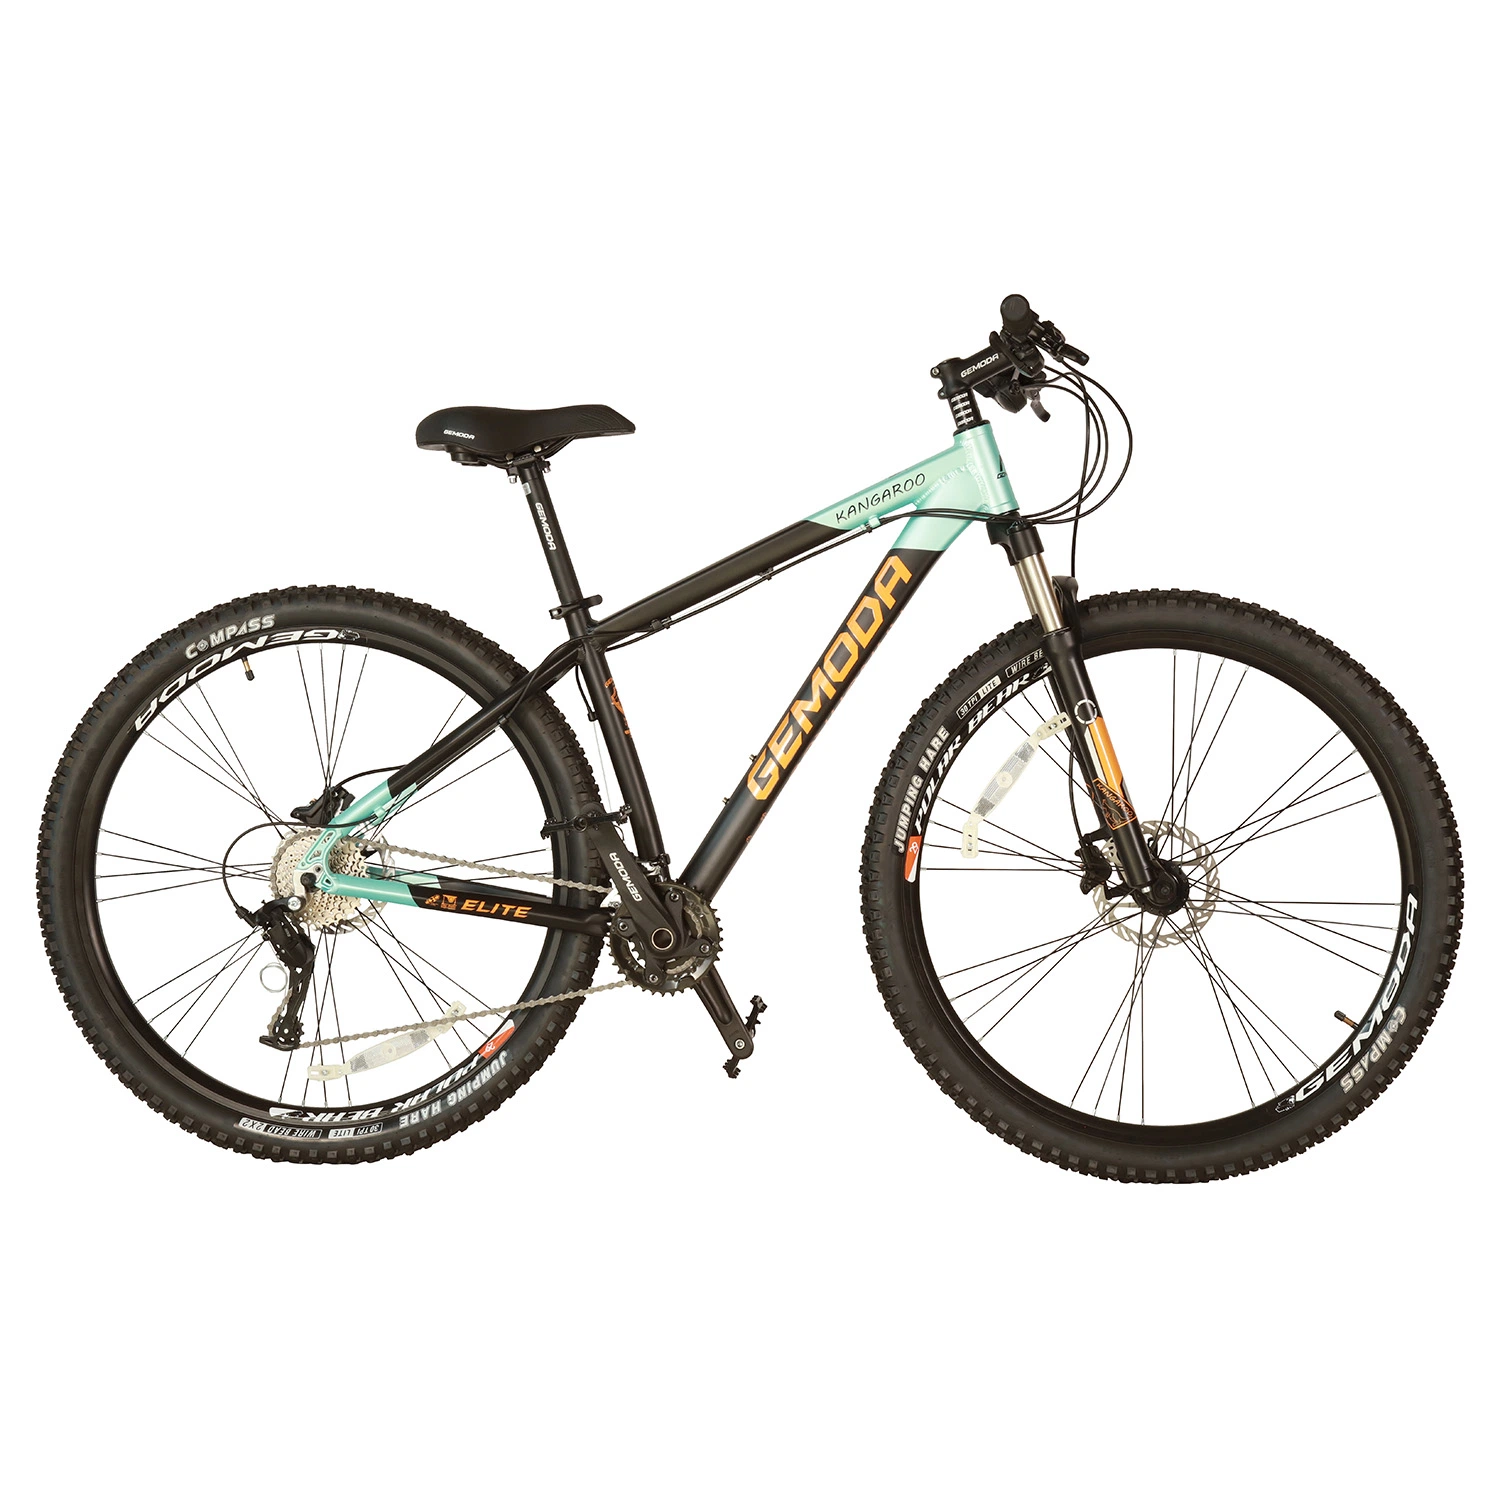 26/27.5/29 Fashion Alloy Frame Mountain Bike with Hydraulic Disc Brake Good Price Discount